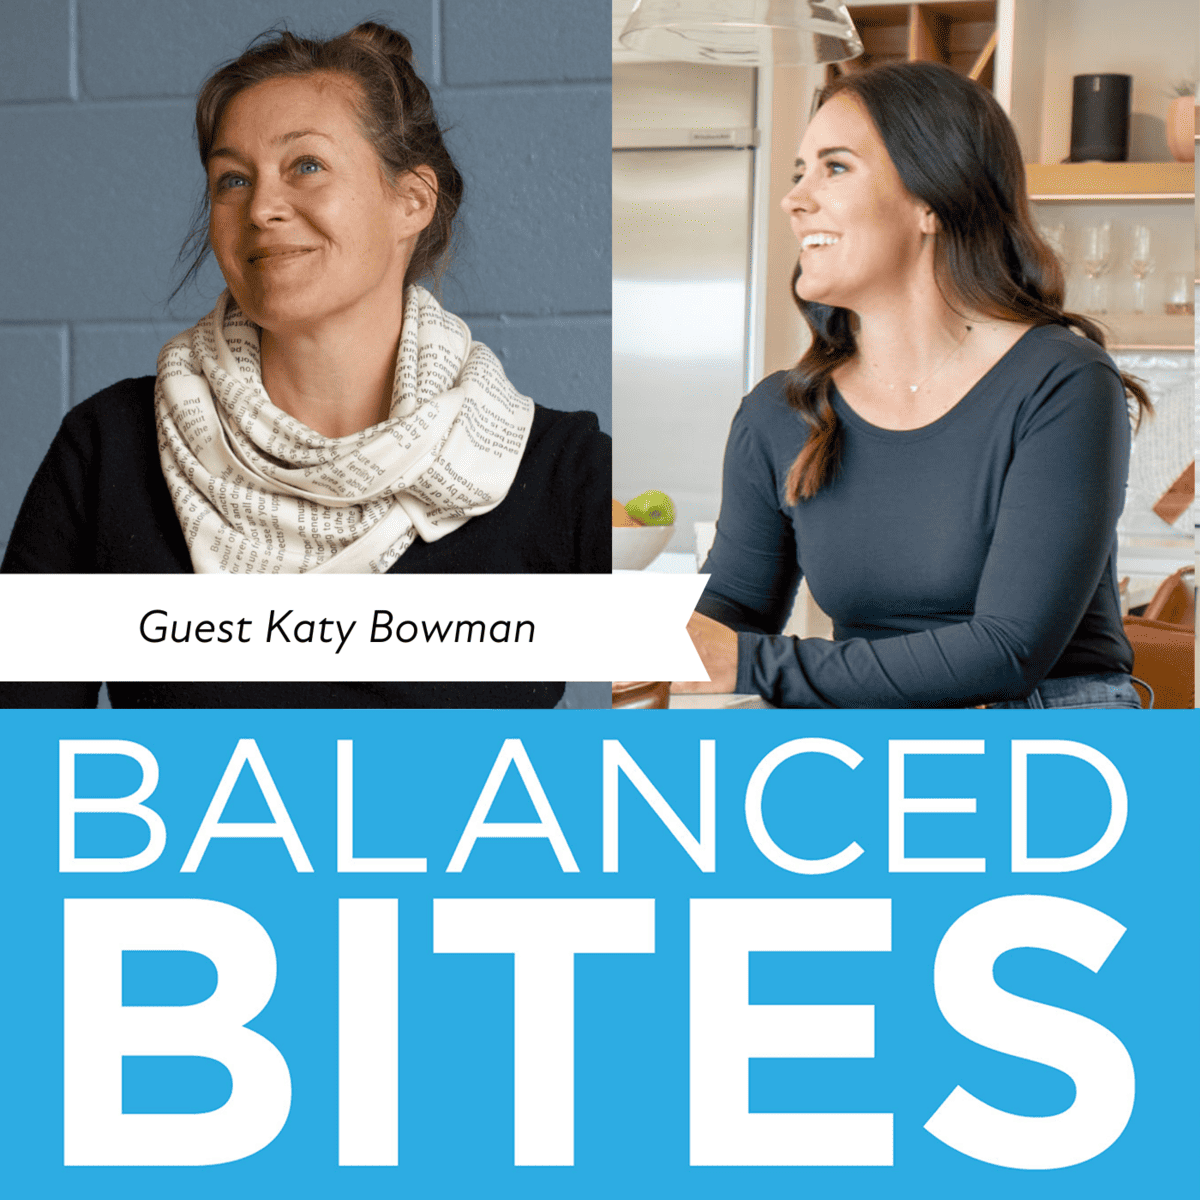 Katy Bowman Balanced Bites episode